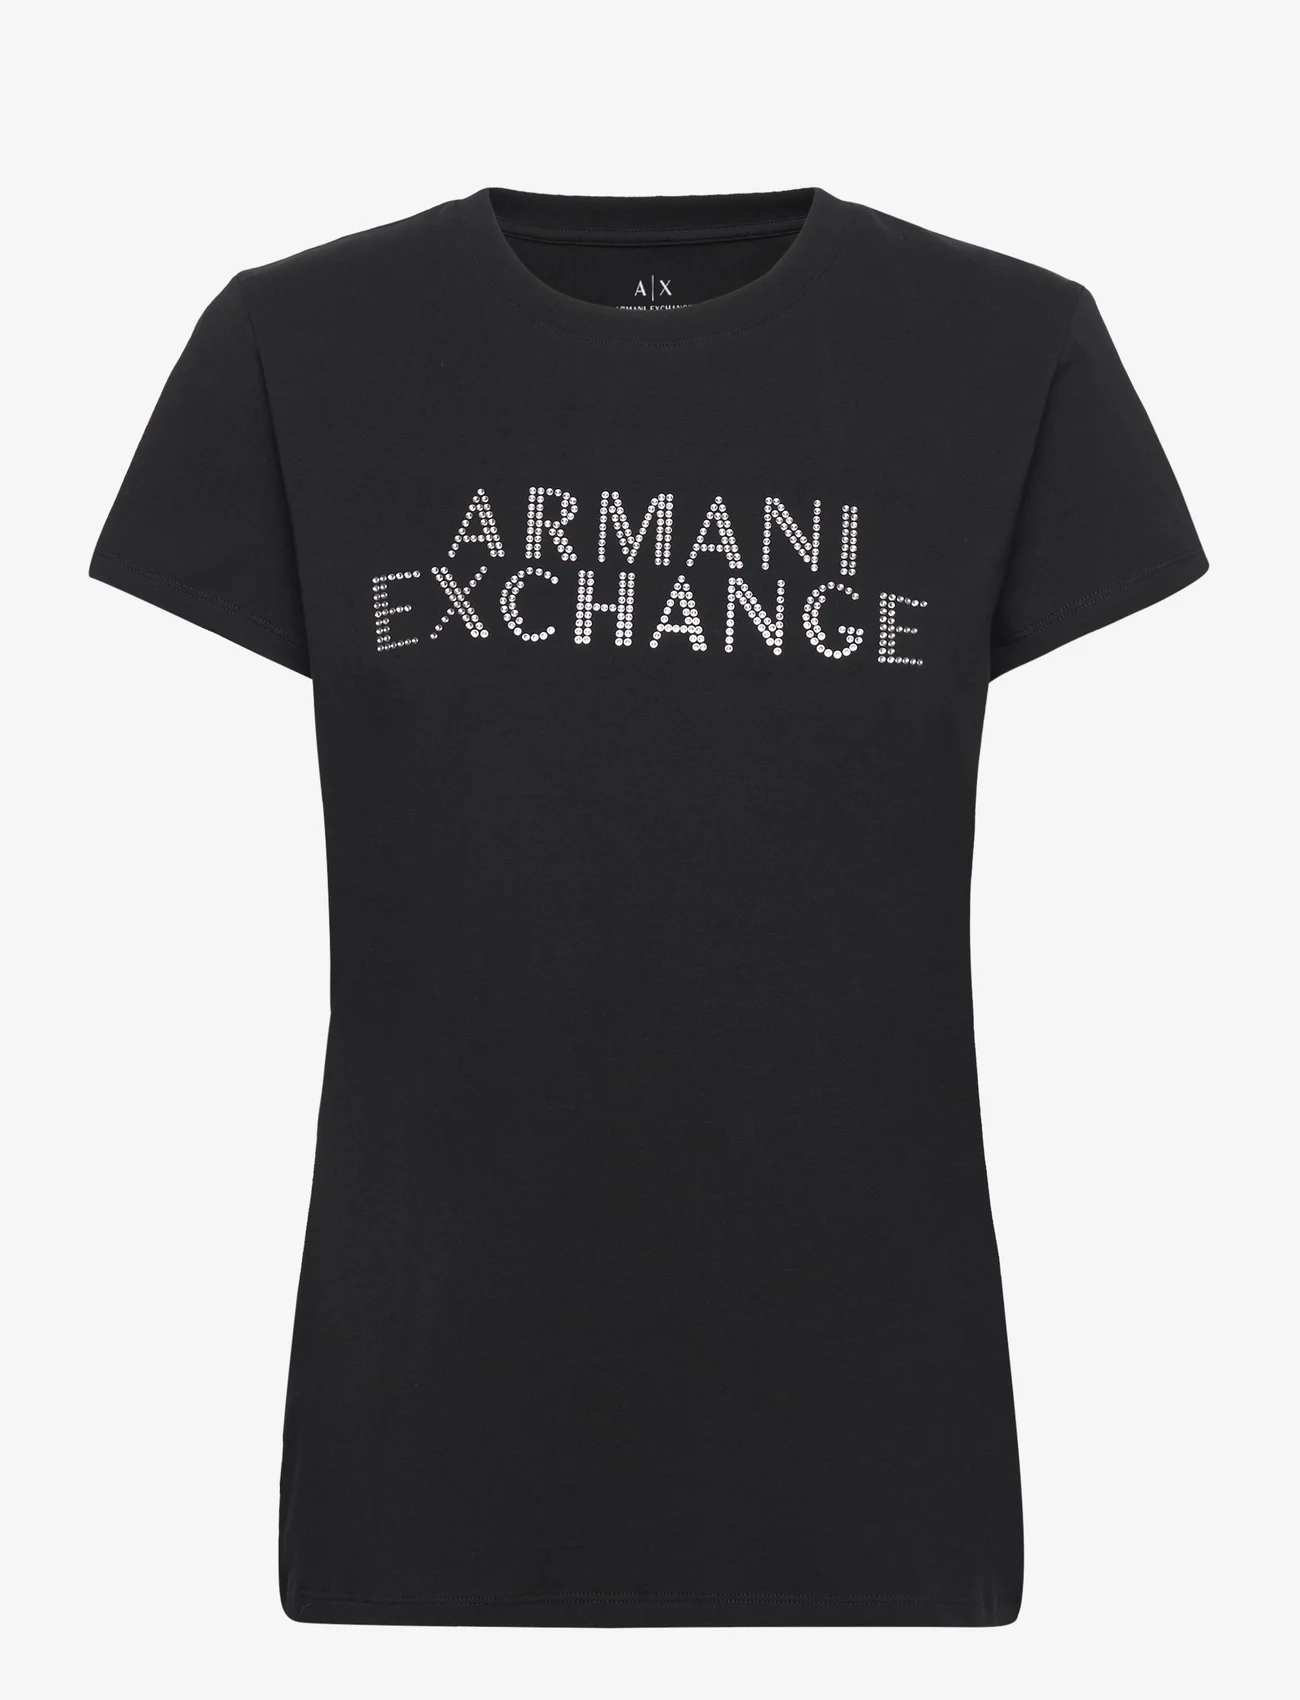 Armani Exchange - T-SHIRT - t-shirty - 1200-black - 0